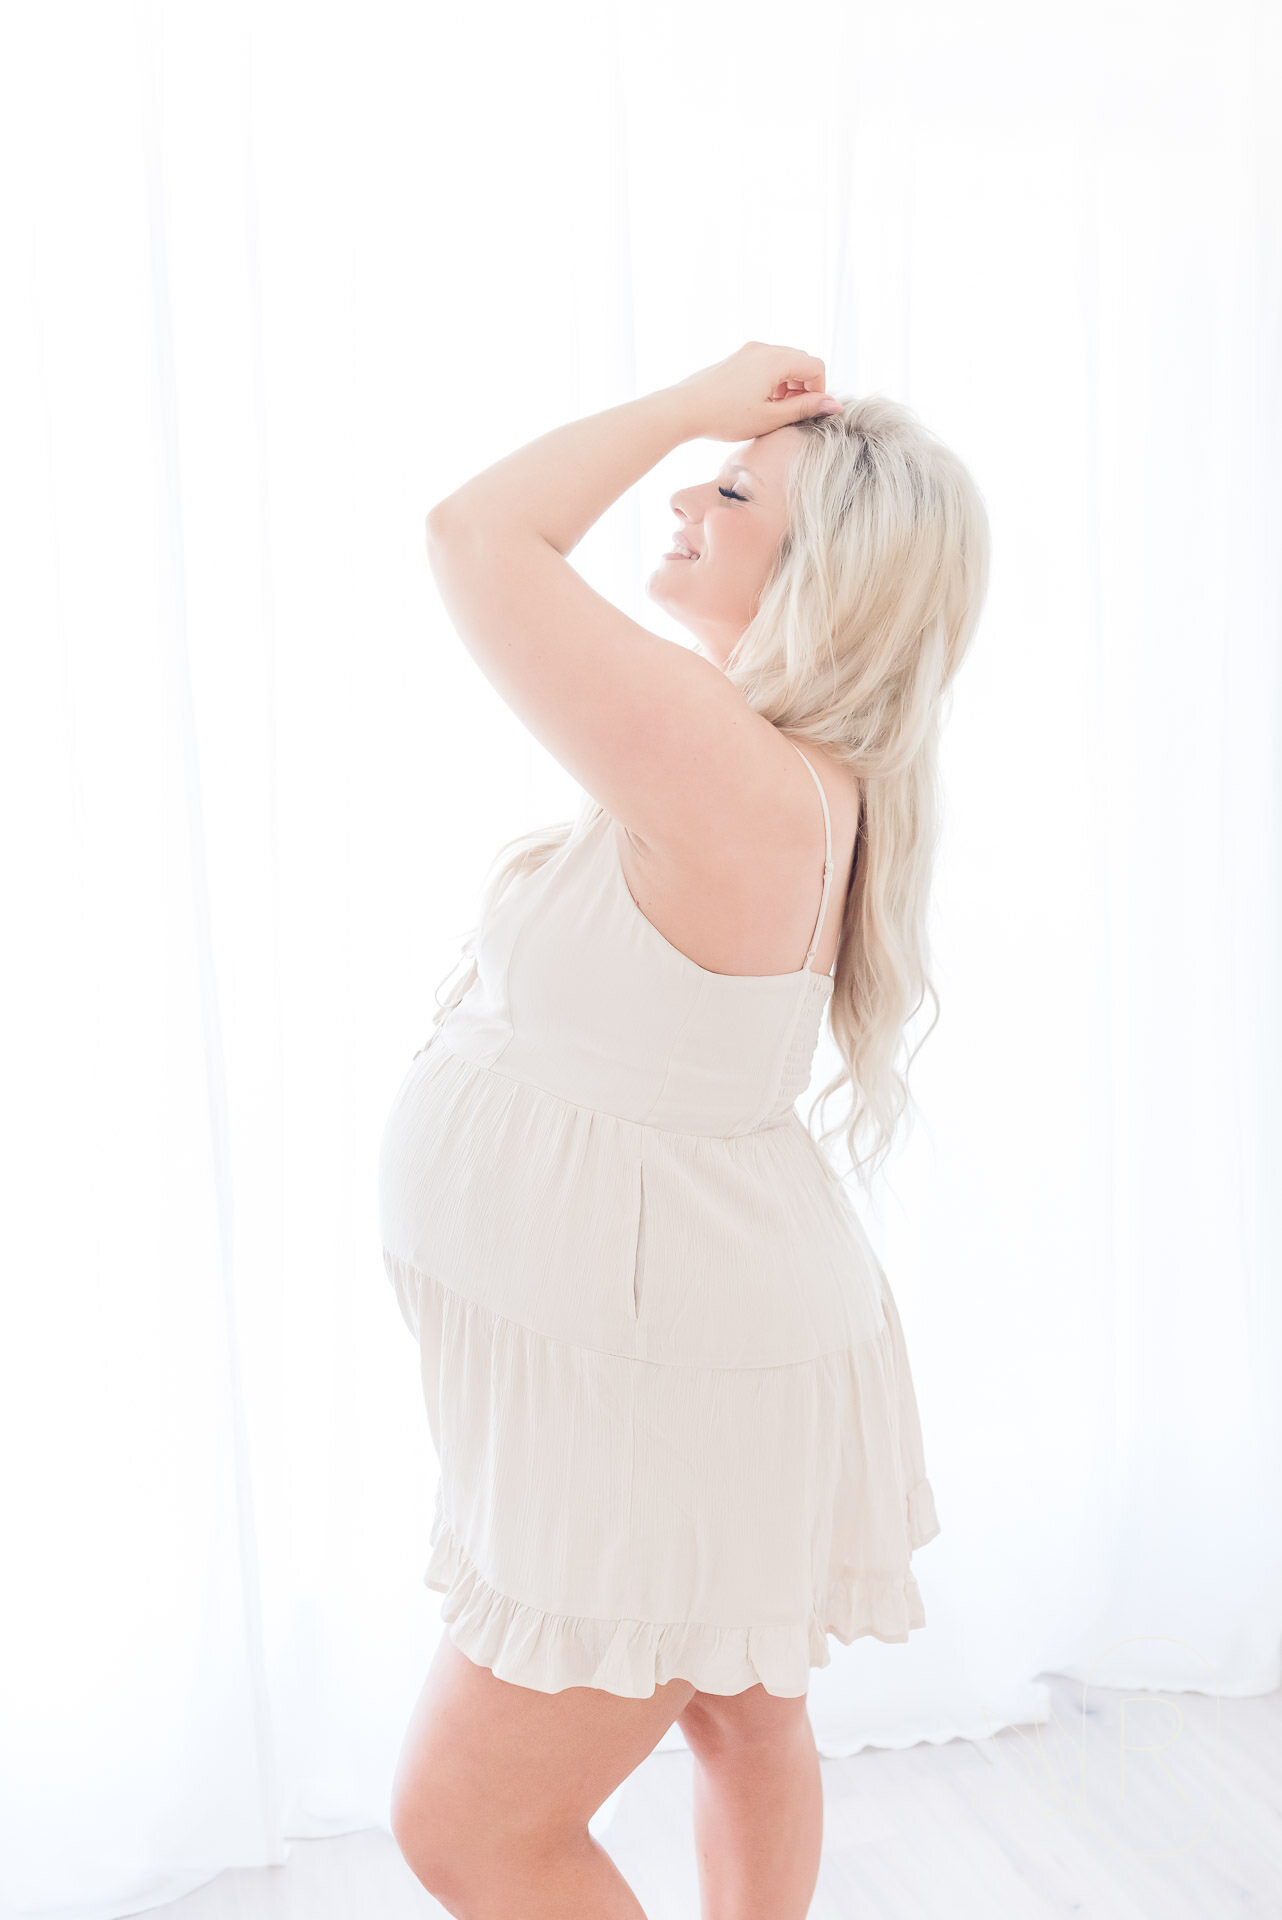 maternity pose ideas